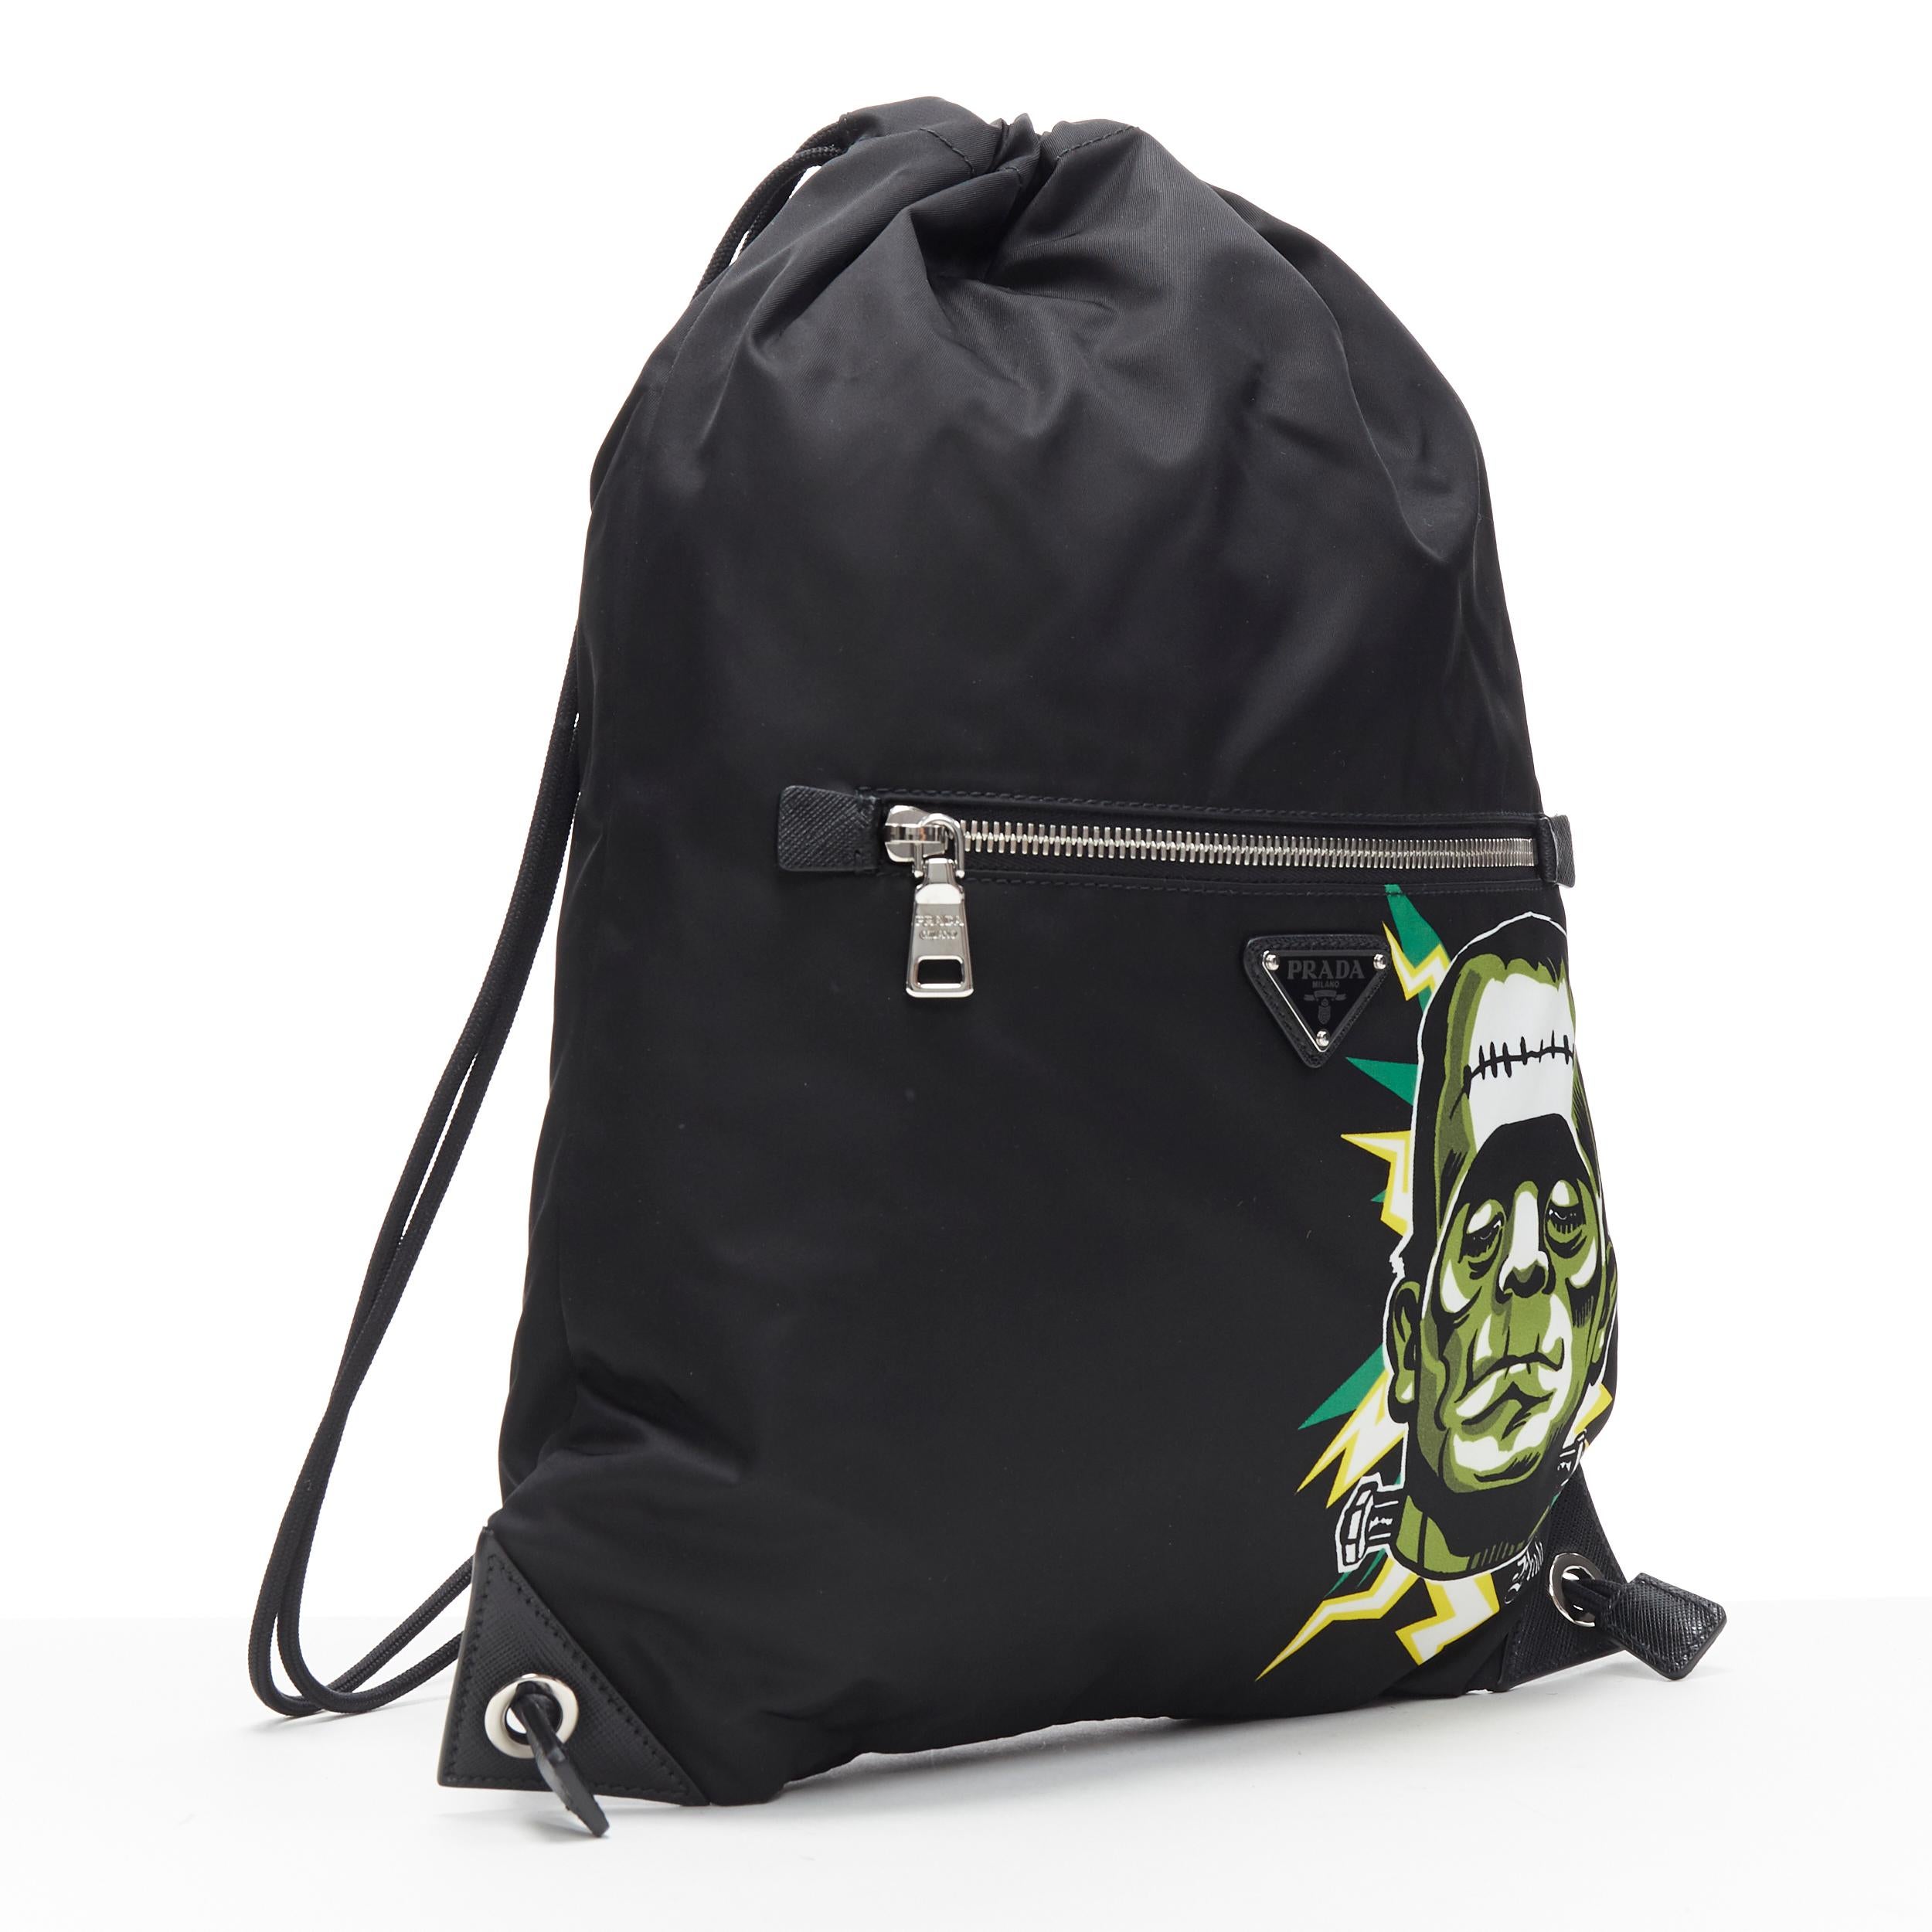 new PRADA 2019 Frankenstein black nylon triangle logo drawstring backpack bag
Brand: Prada
Designer: Miuccia Prada
Collection: Fall Winter 2019
Model Name / Style: Drawstring backpack
Material: Nylon
Color: Black
Pattern: Solid
Closure: Zip
Extra